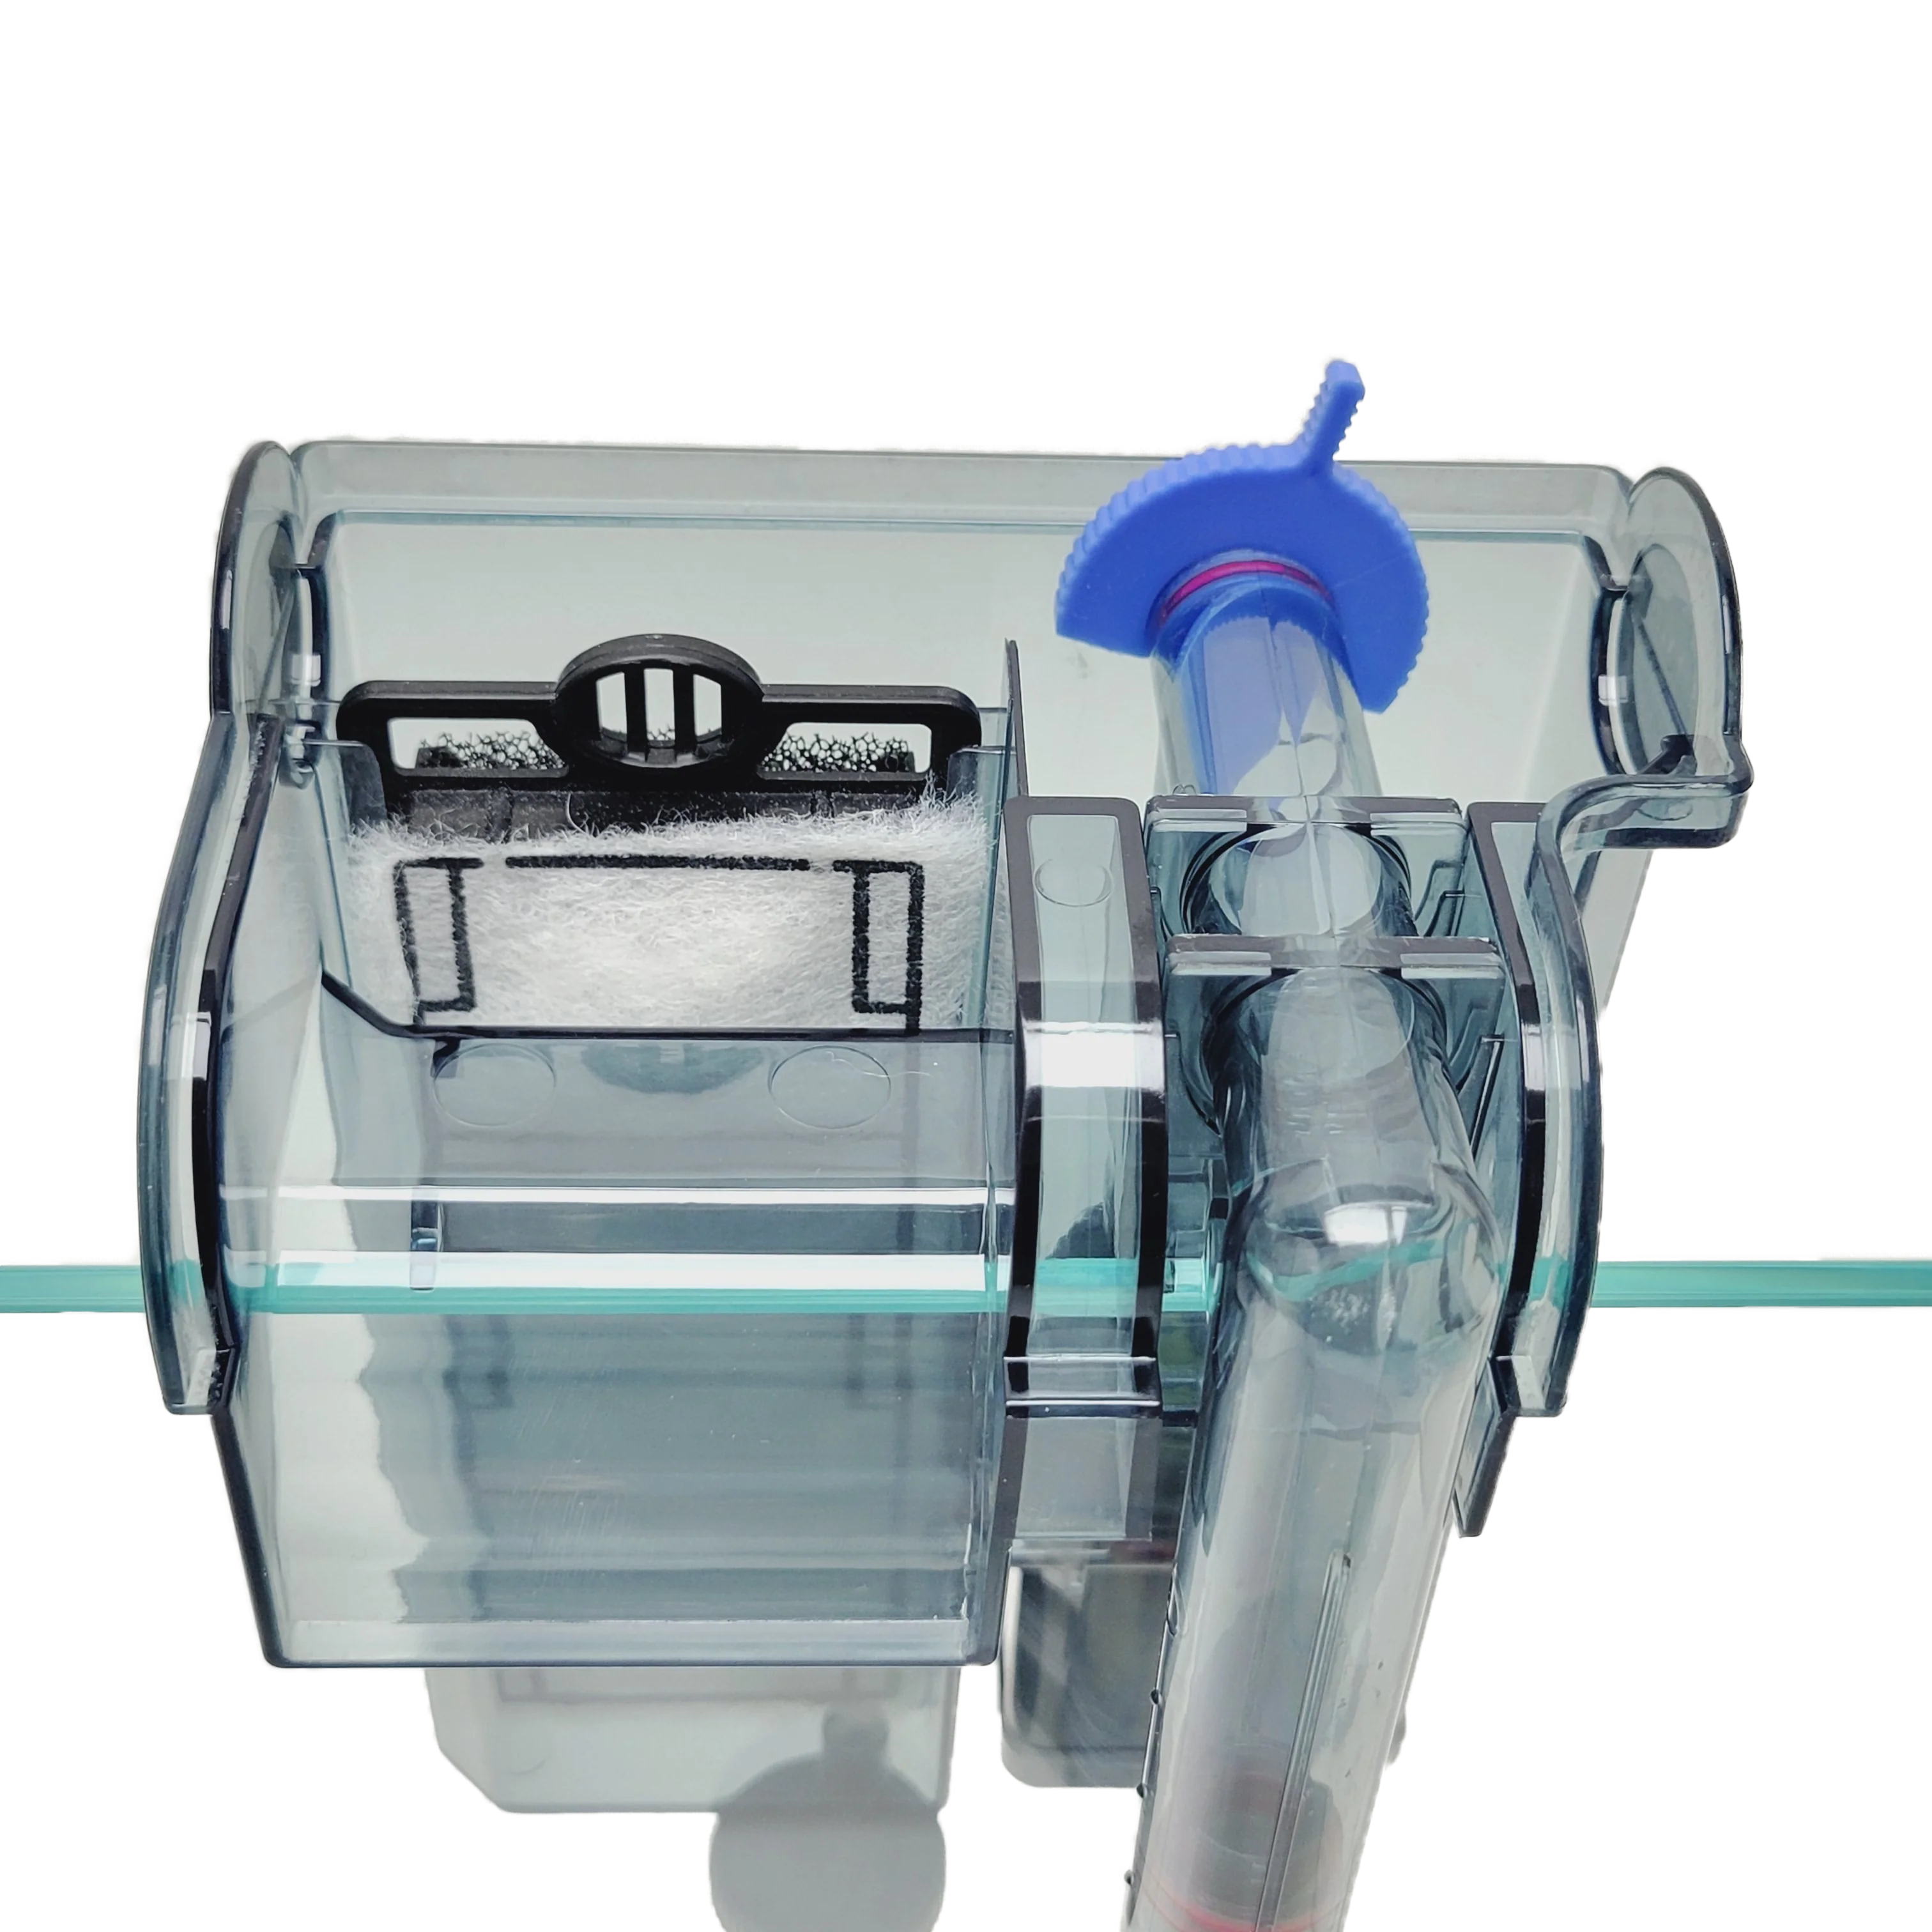 Lifegard Aquatics HOF-10 Slim Design Hang on Filter for aquariums up to 10 gallons